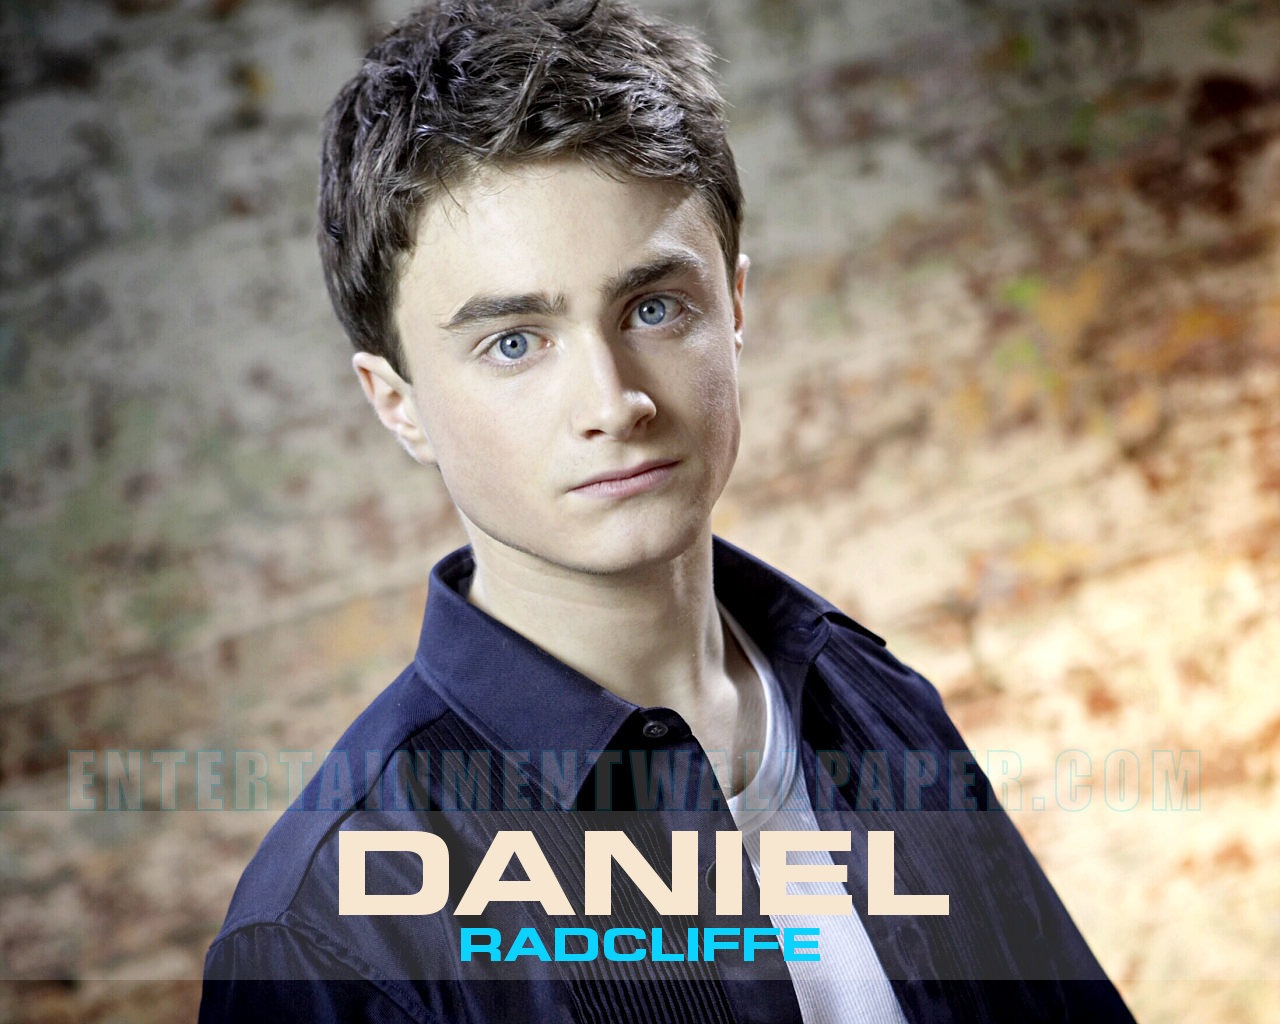 Filmovízia: Daniel Radcliffe [Wallpaper]